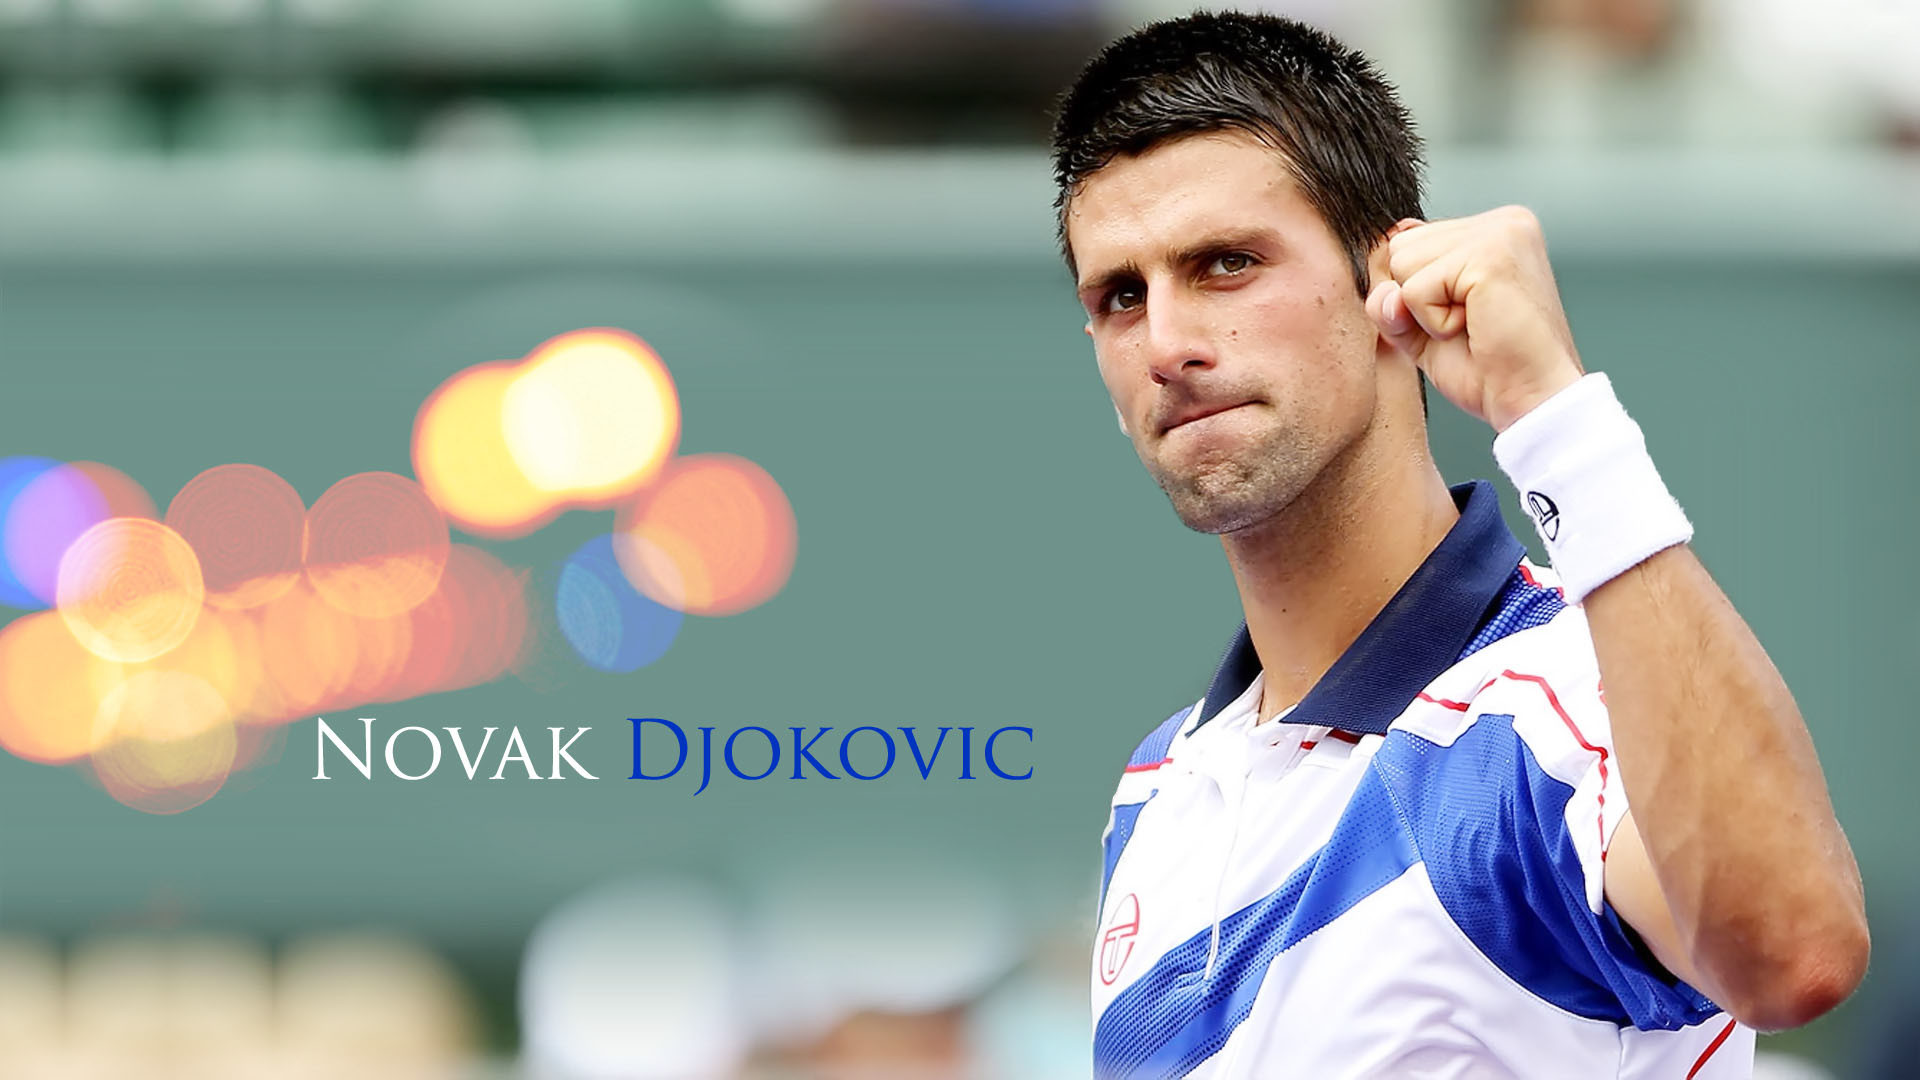 Novak Djokovic Wallpapers.